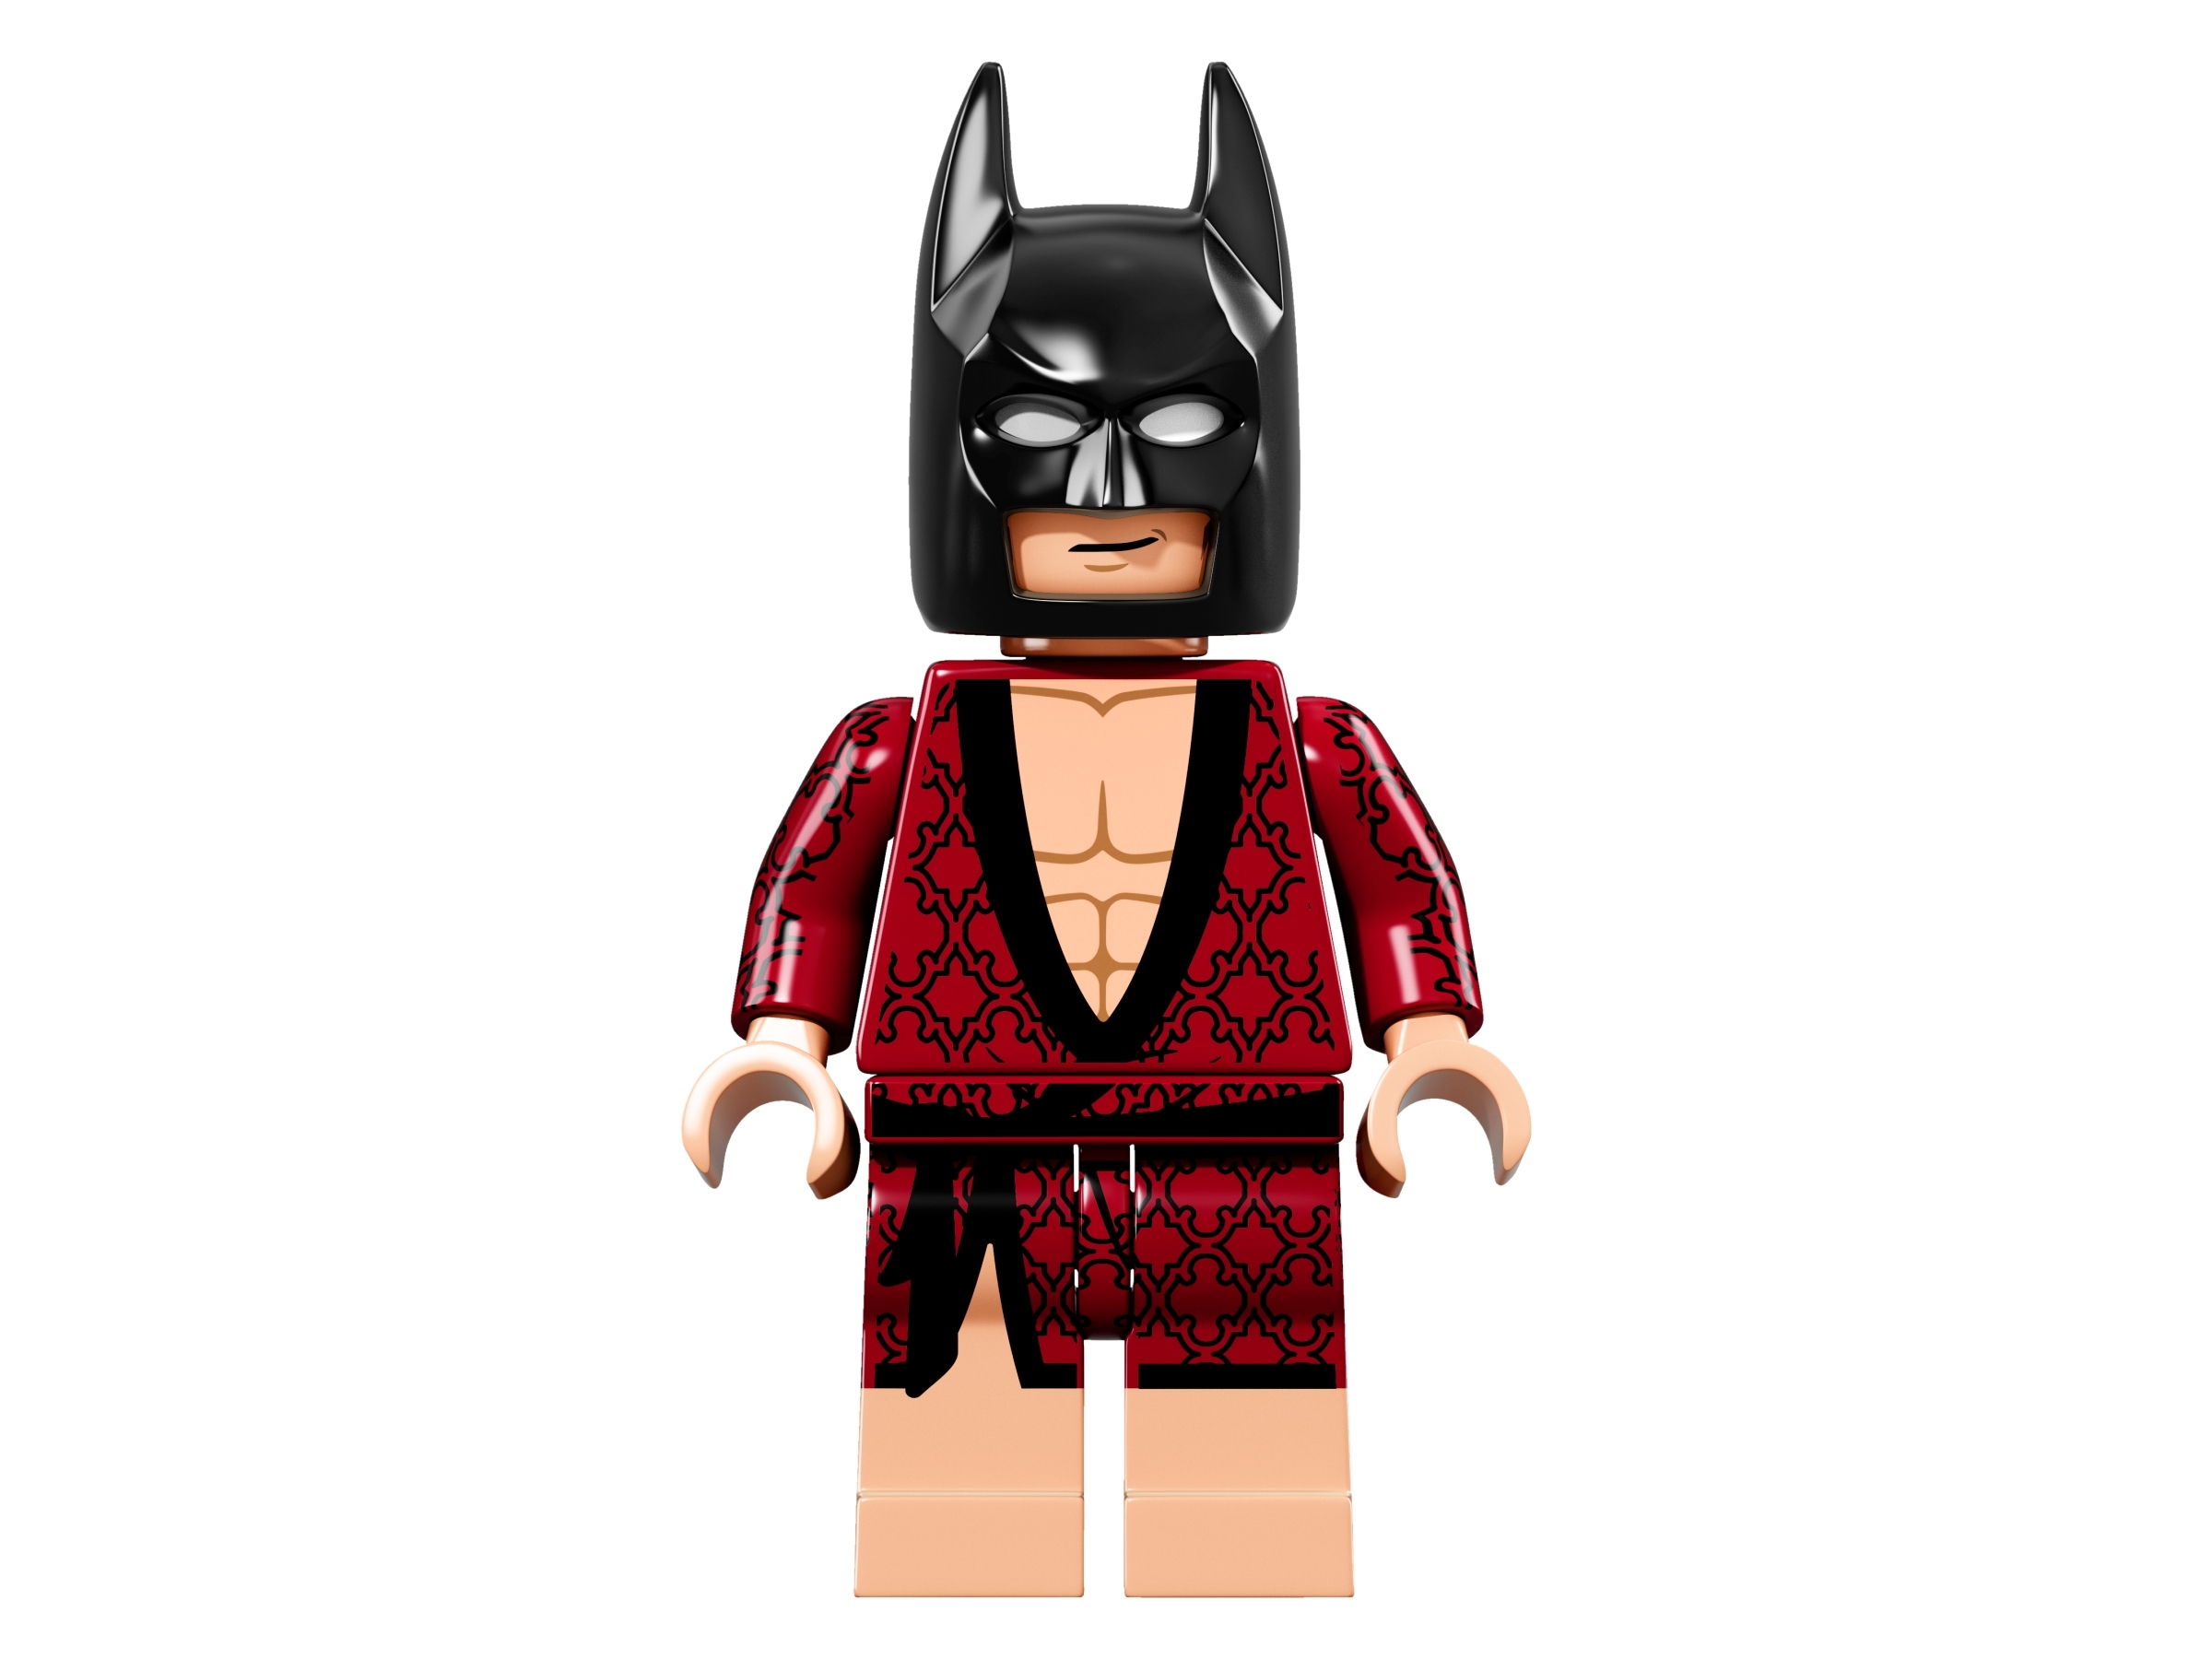 LEGO NEW BATMAN MOVIE SERIES Glam Metal Batman MINIFIGURE 71017 FIGURE 